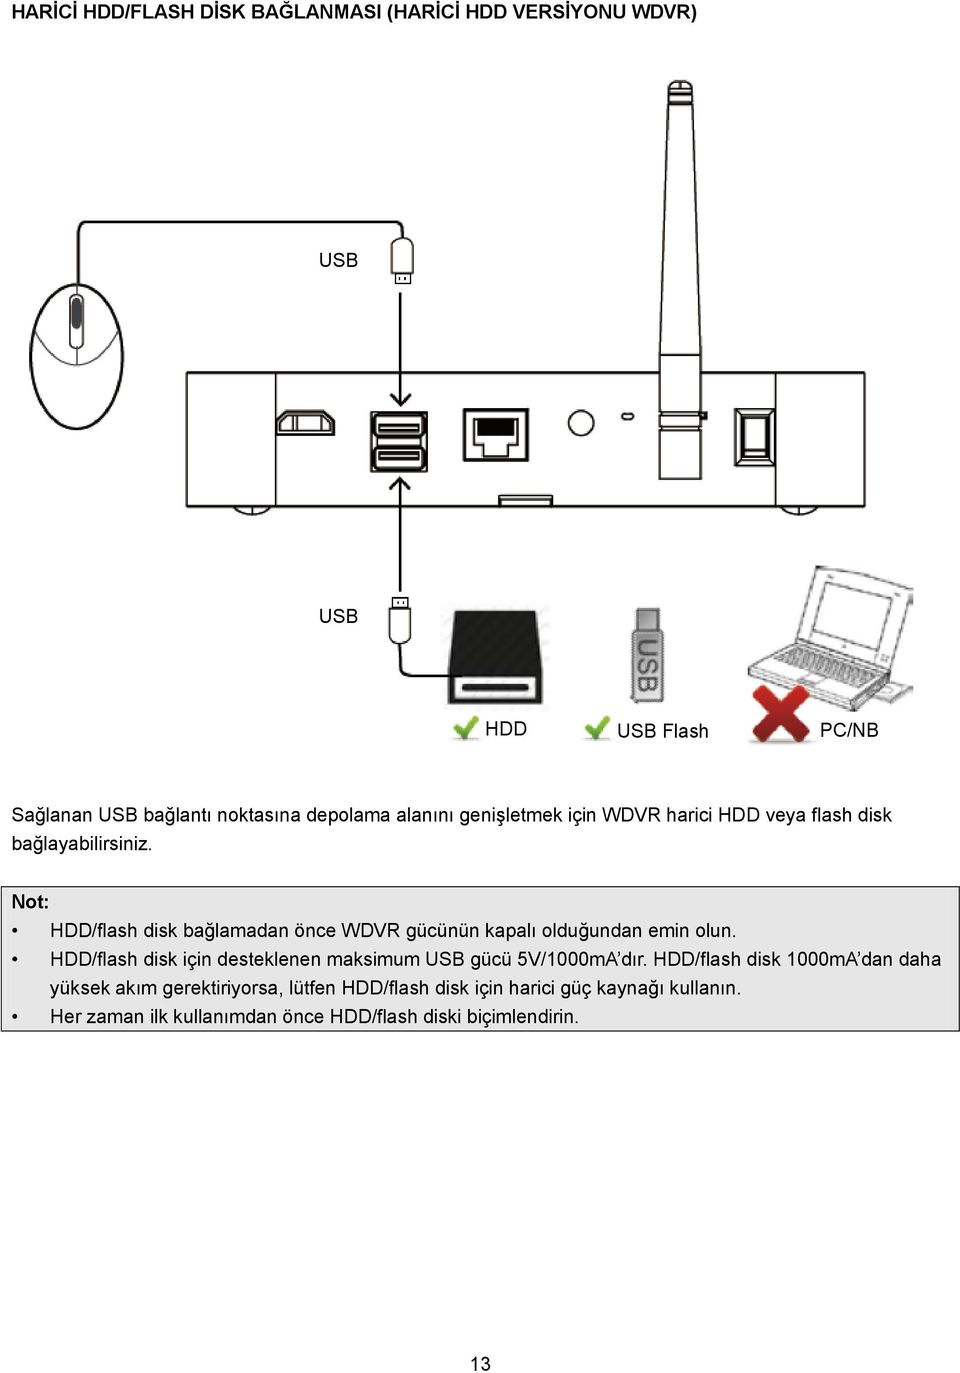 Not: HDD/flash disk bağlamadan önce WDVR gücünün kapalı olduğundan emin olun.